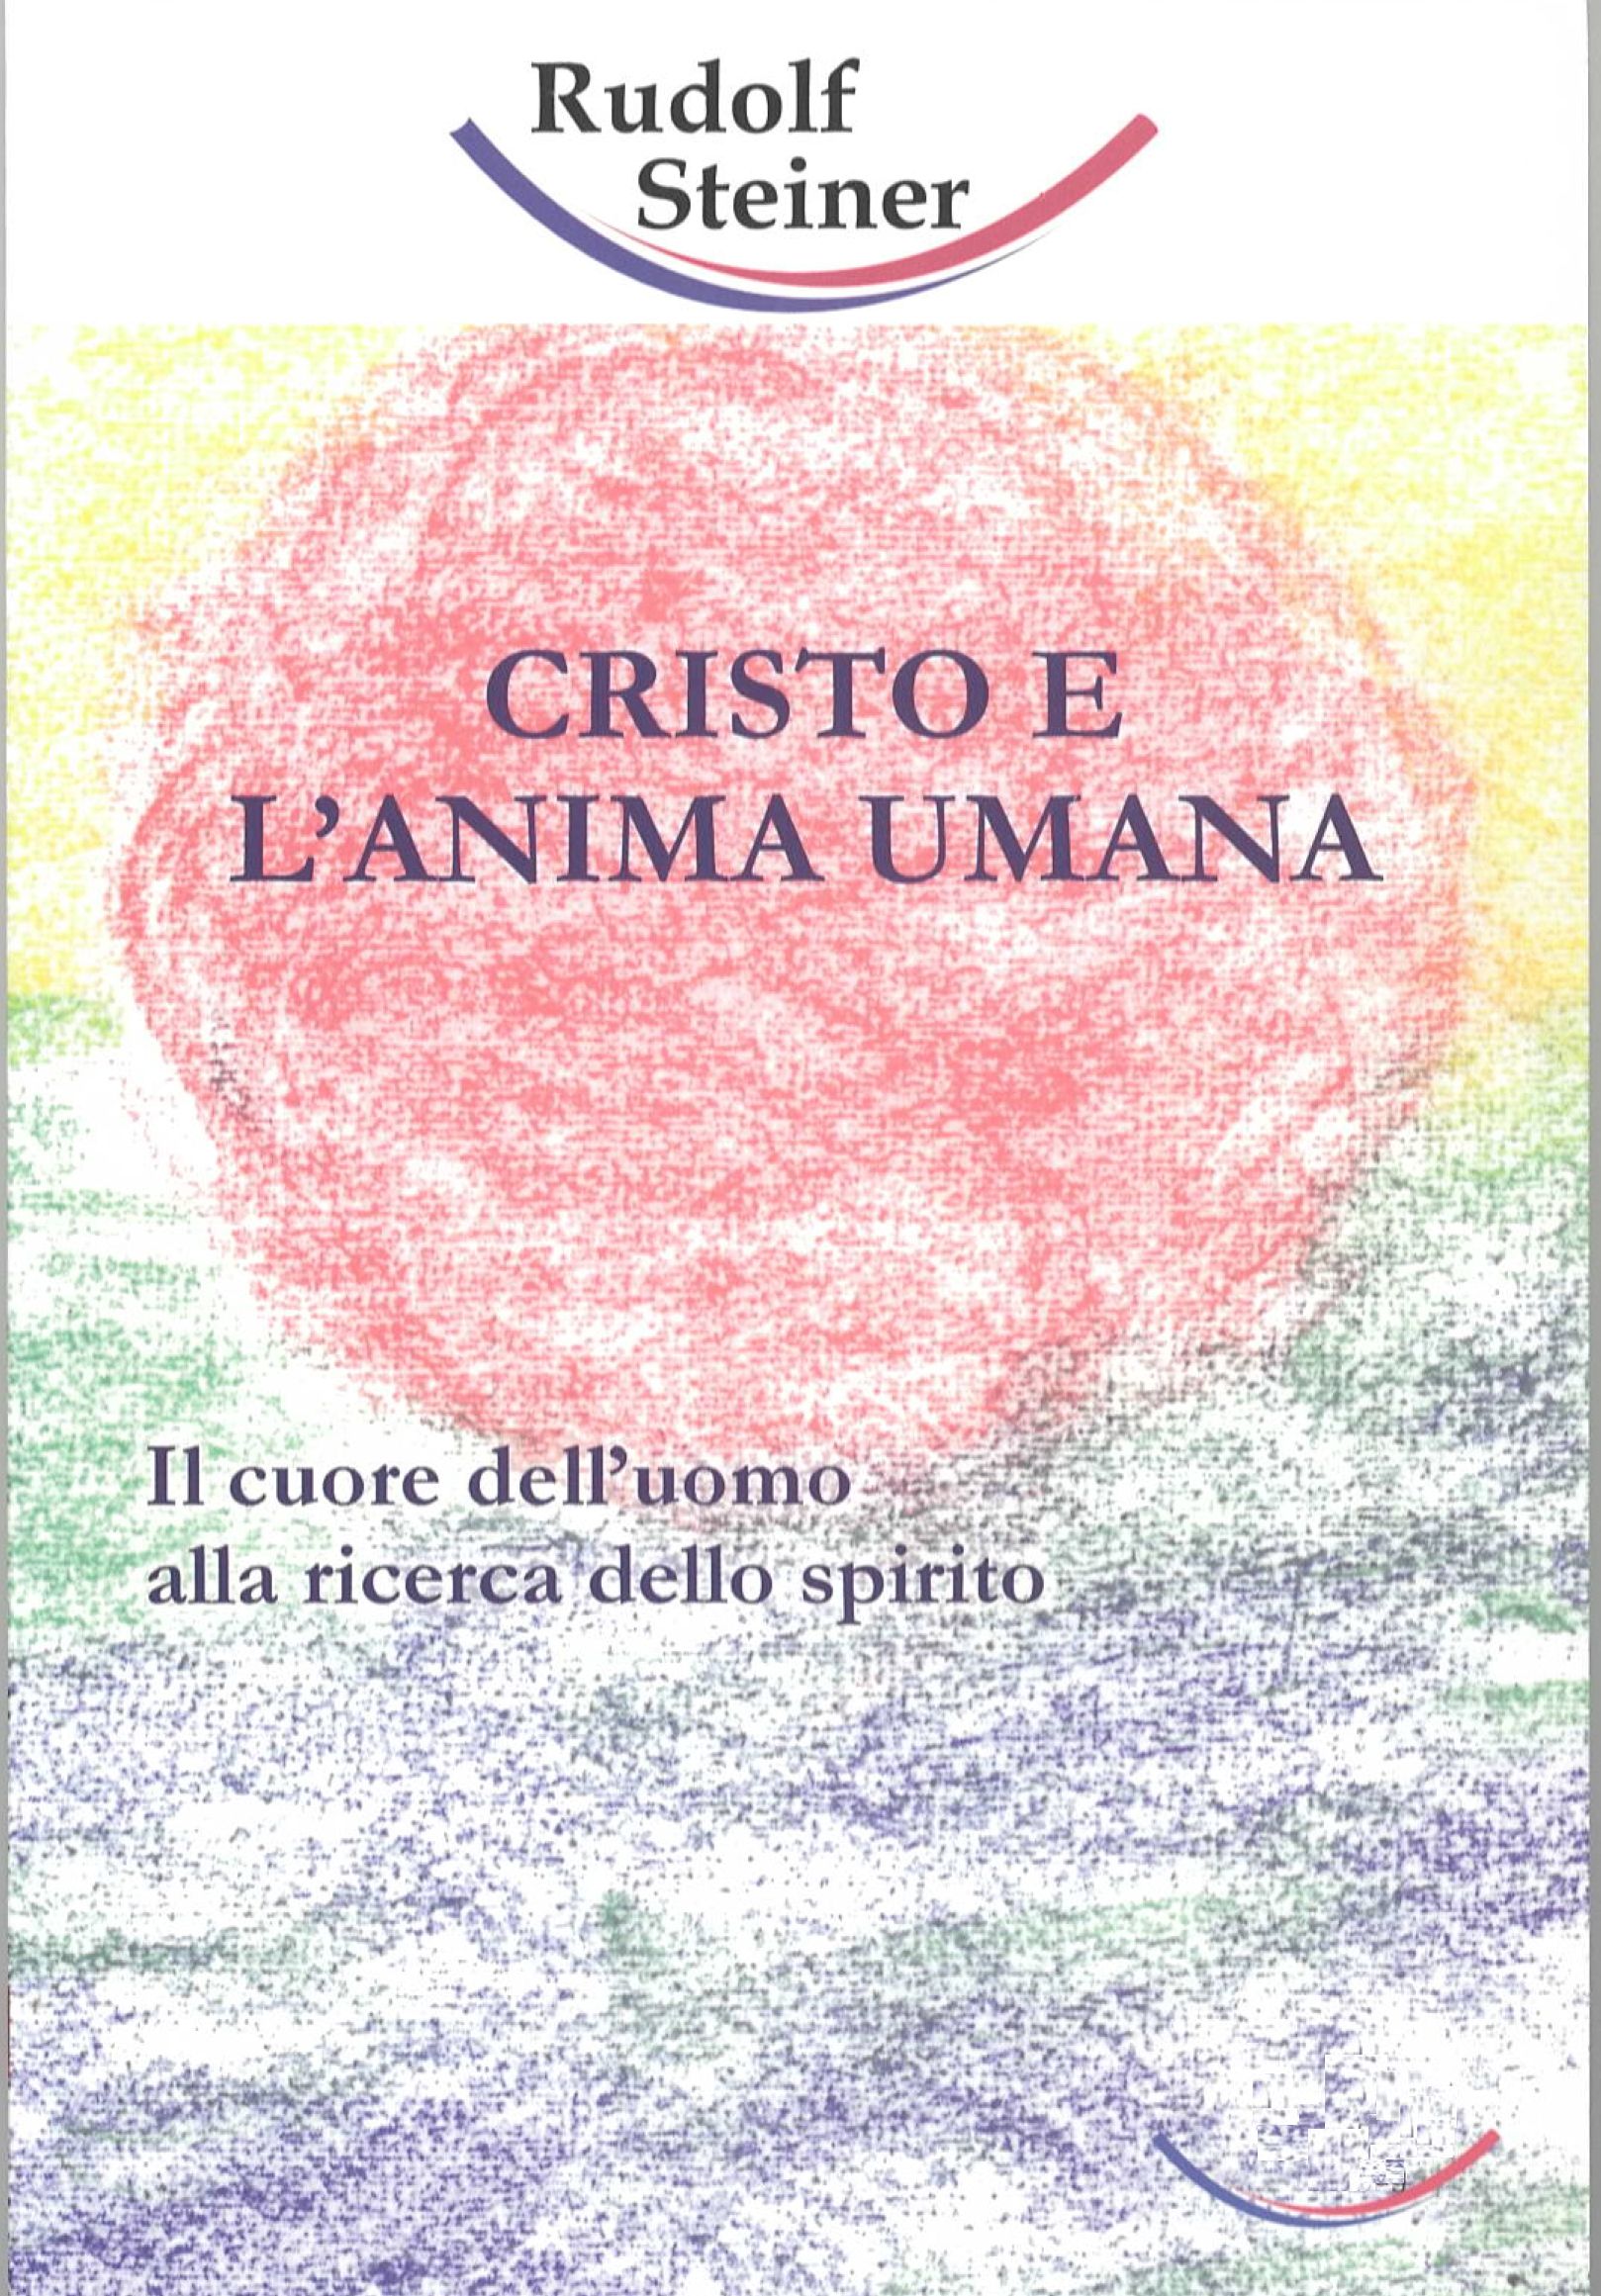 CRISTO E LA ANIMA UMANA (Rudolf Steiner) - copertina originale